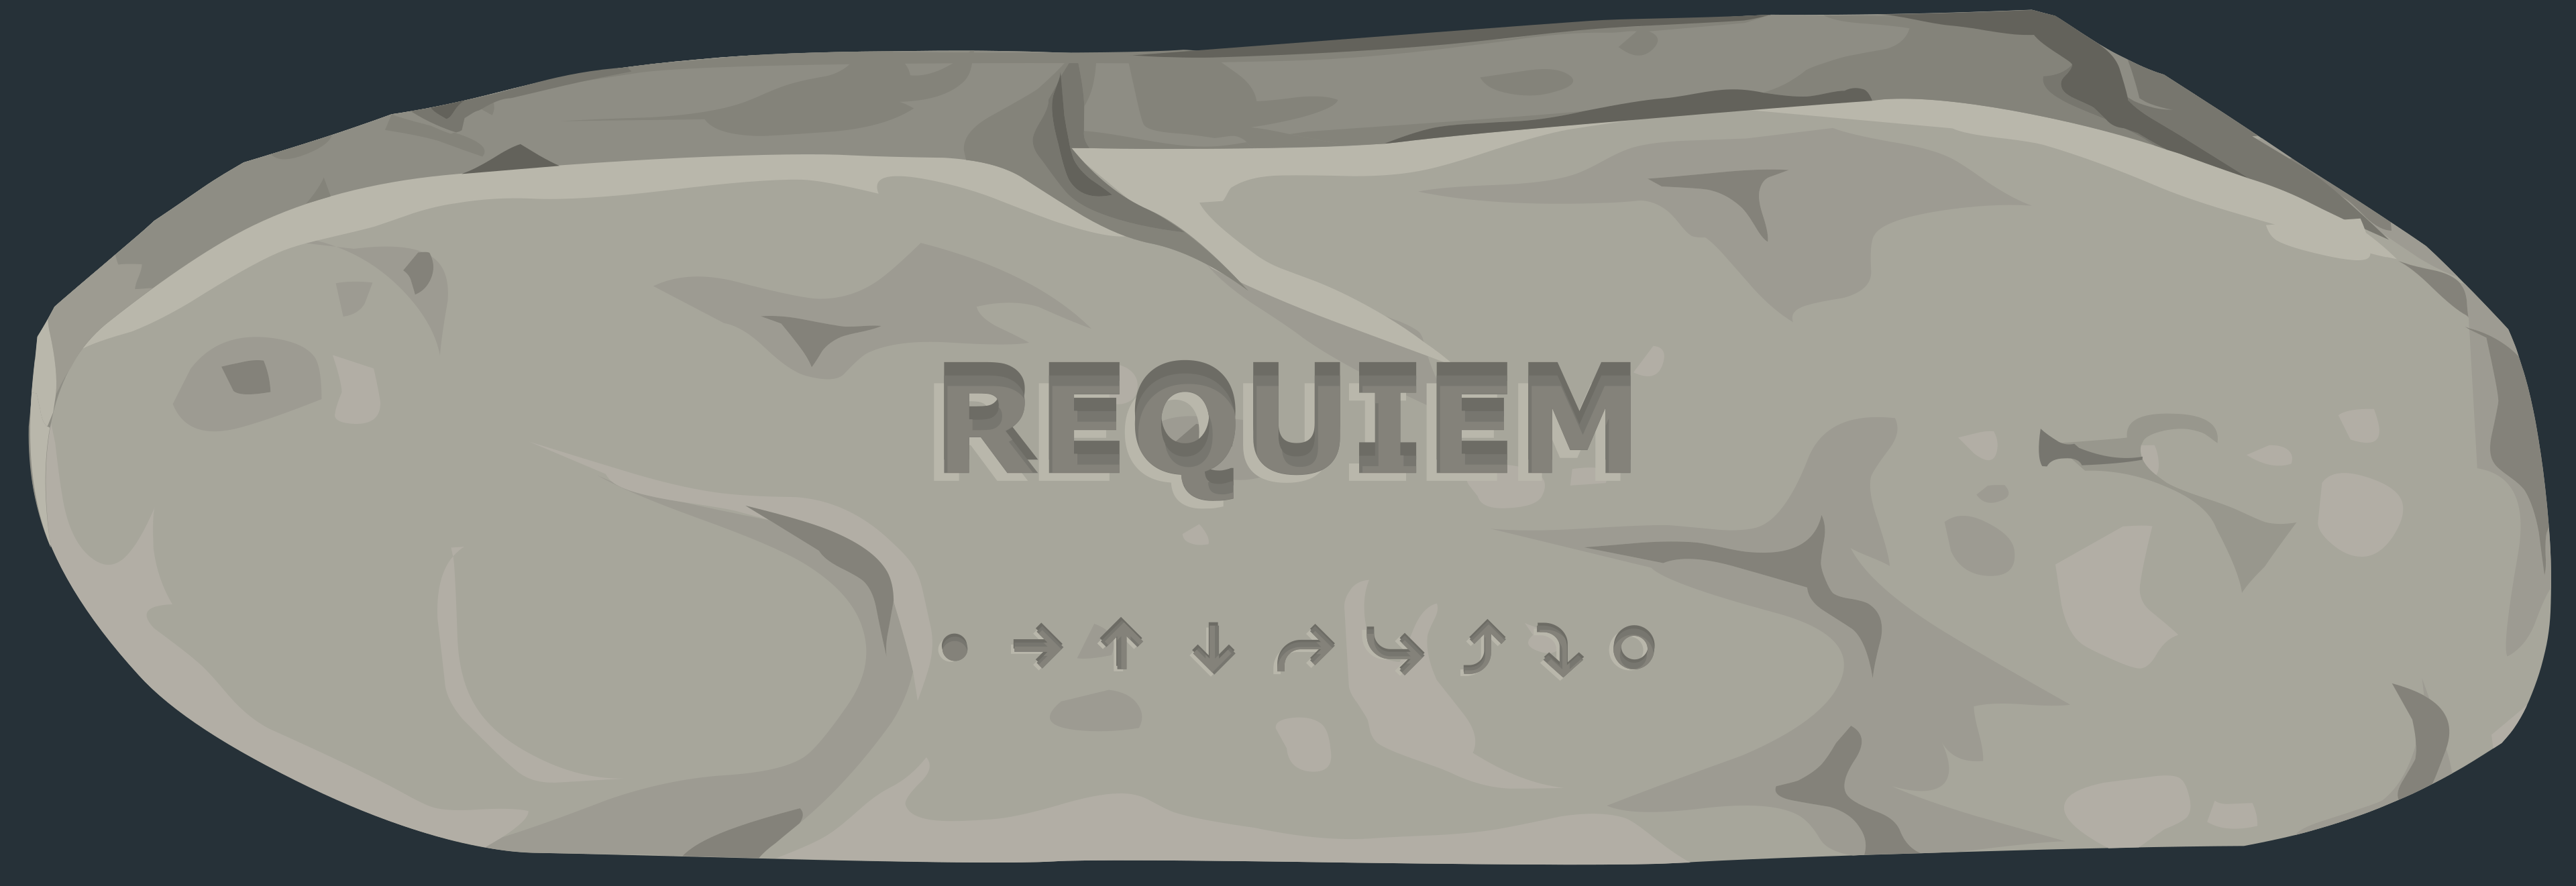 Requiem - You Aren't the Hero Anymore